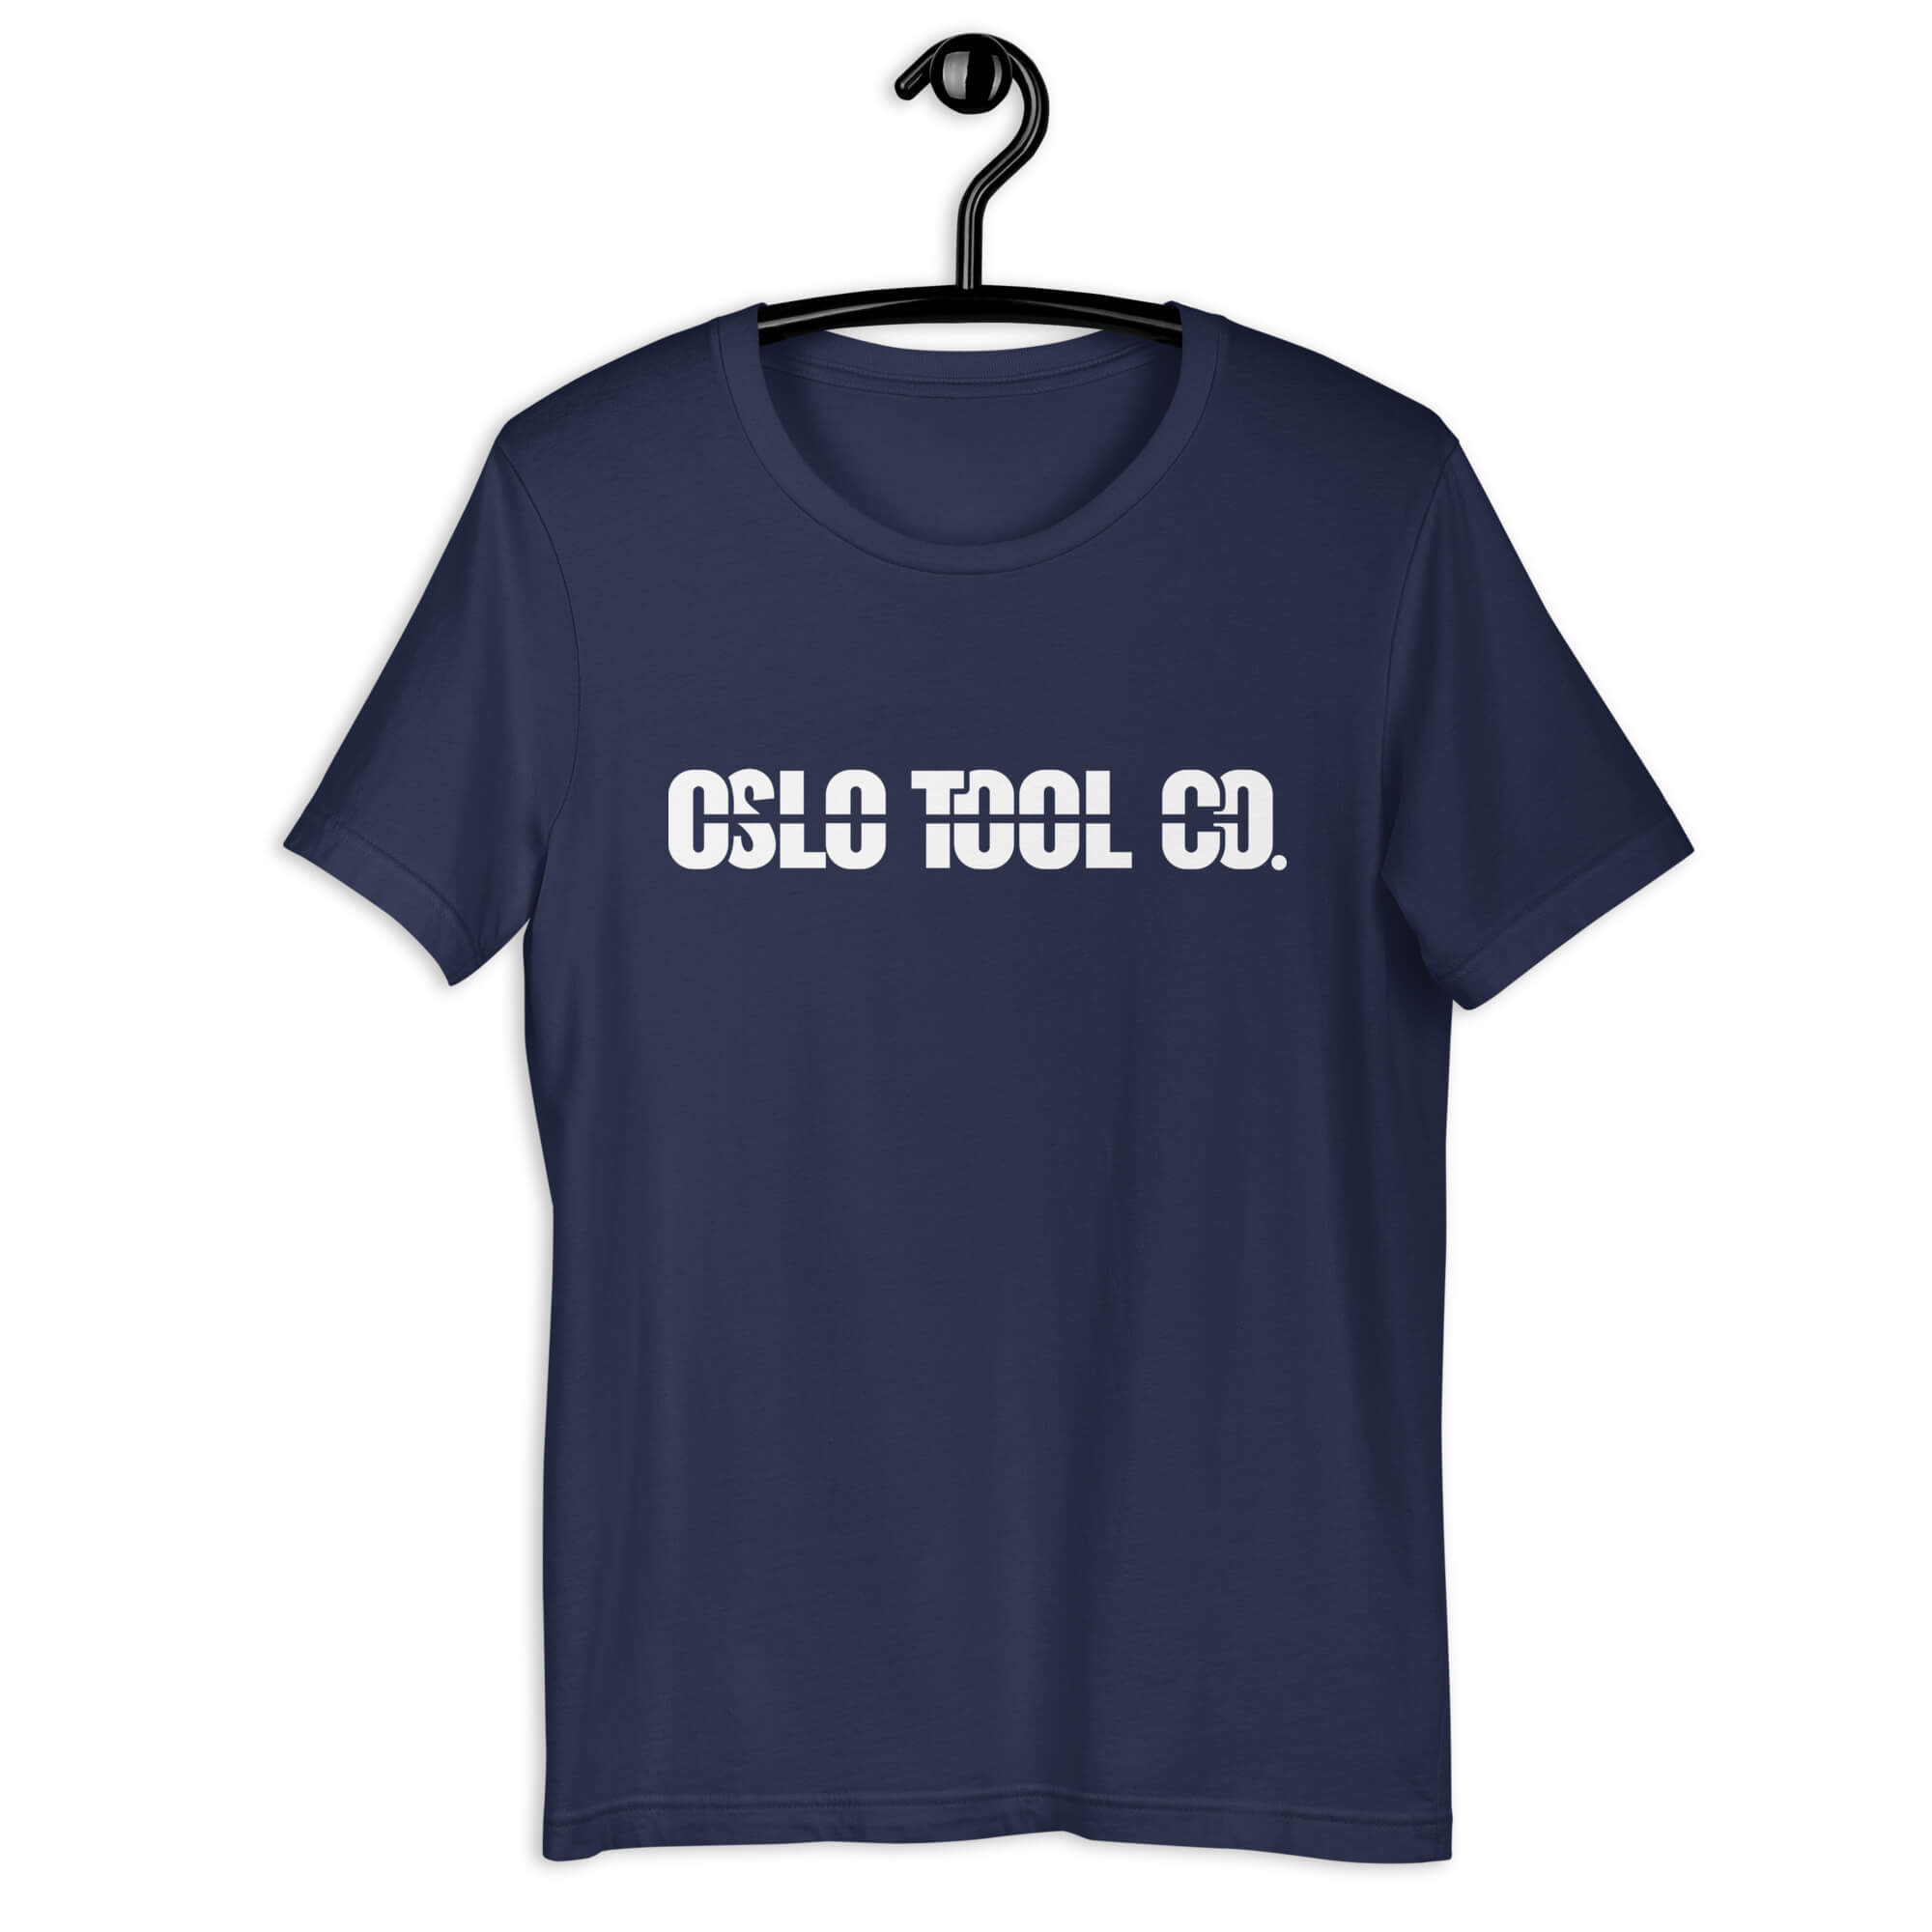 Oslo Tool Co. T-shirt